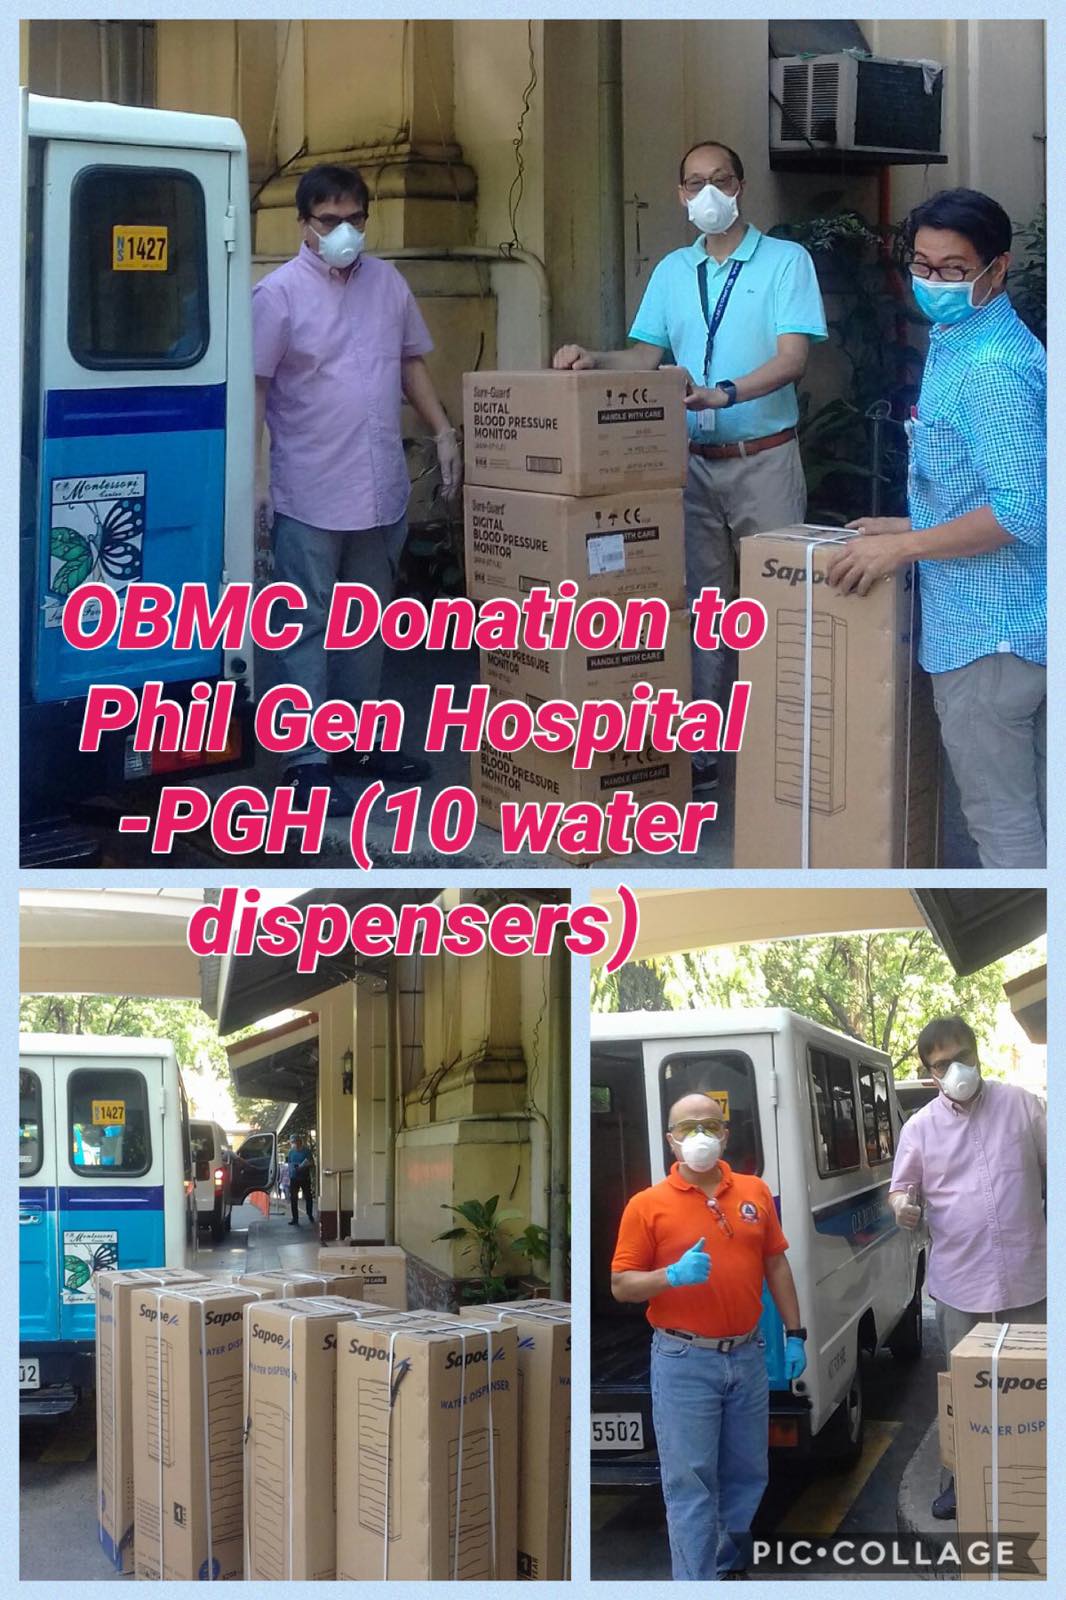 Operation Brotherhood donates to Philippine General Hospital